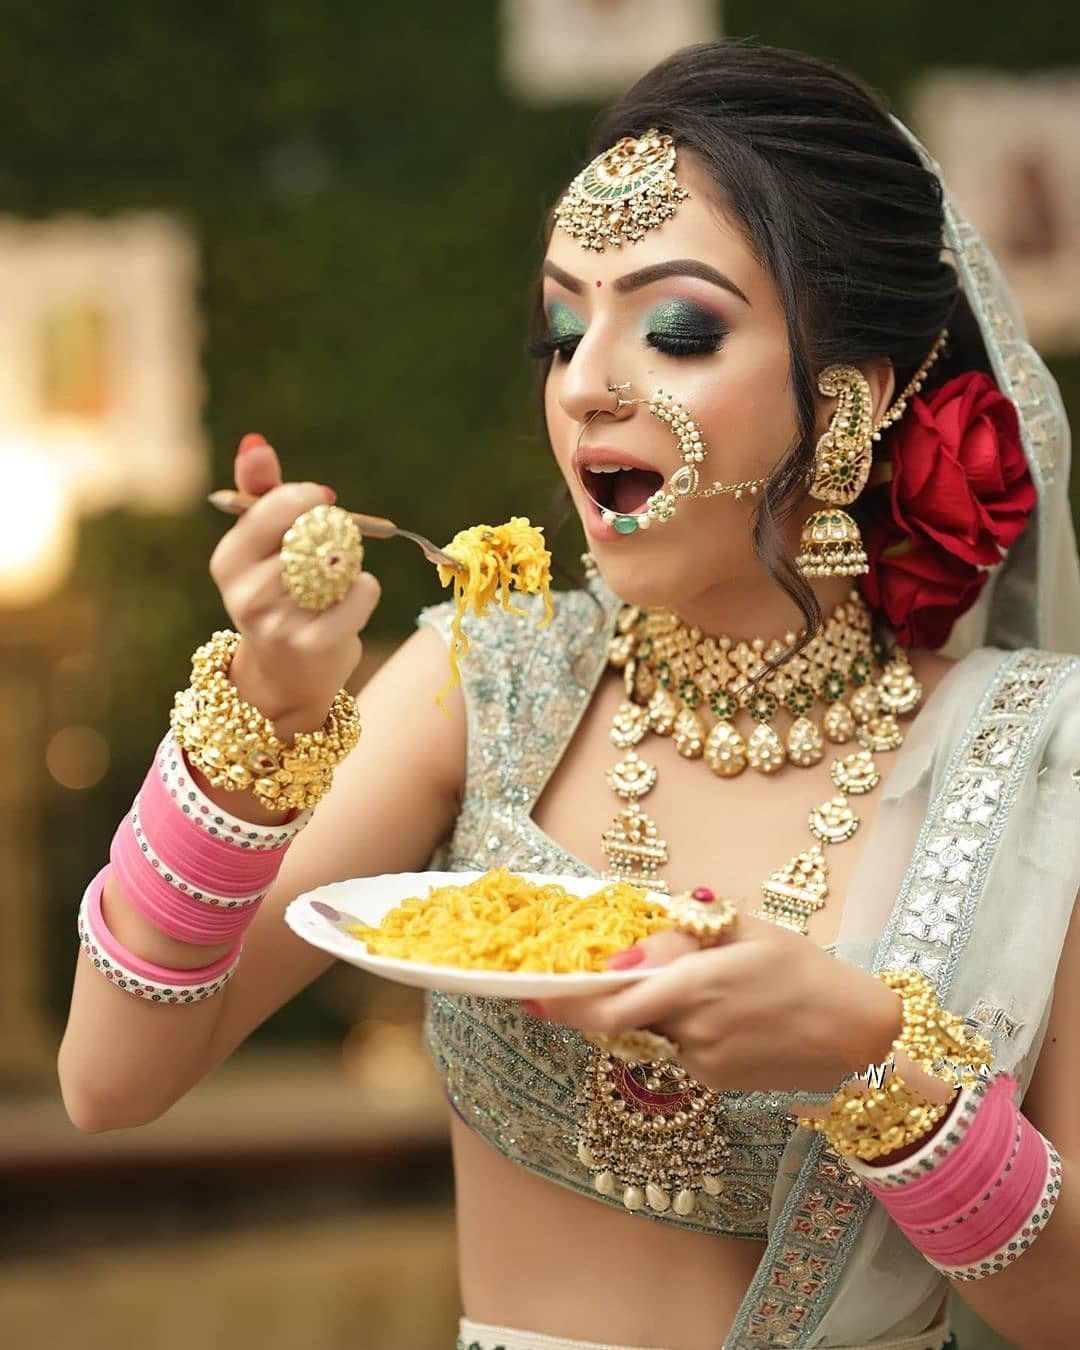 Indian Wedding Photographer Fairfield CT | Tashography